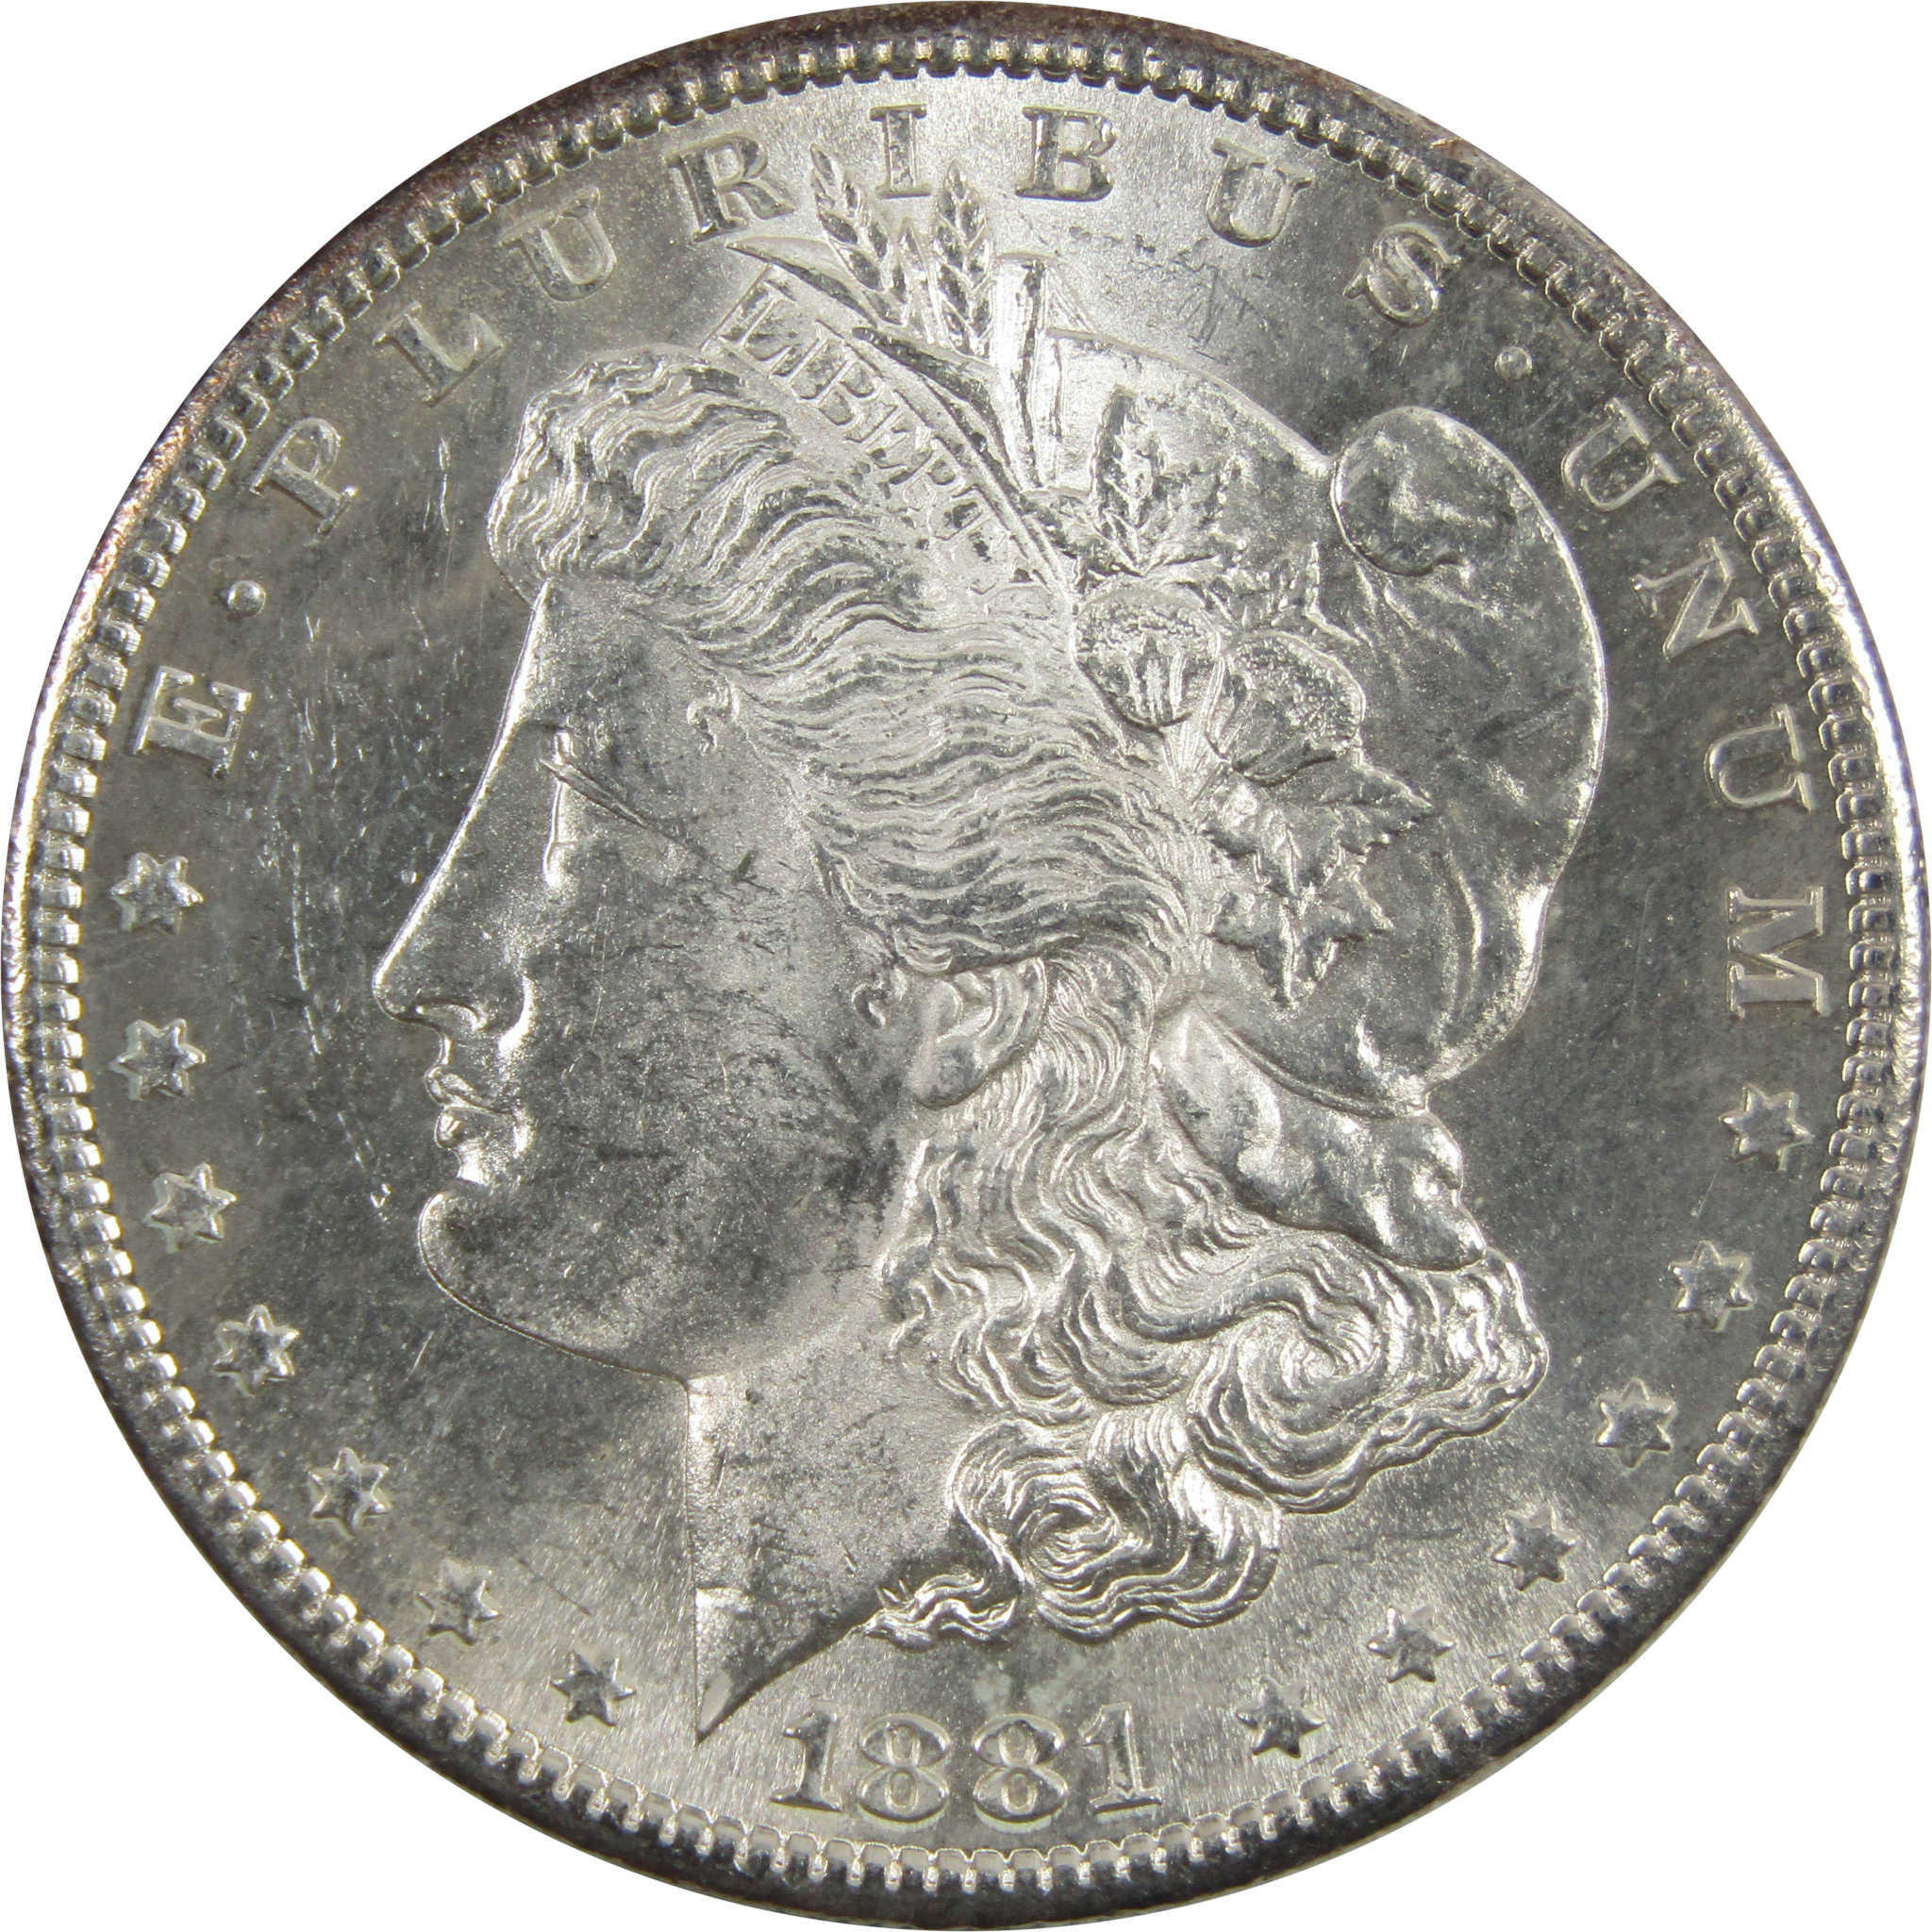 1881 S Morgan Dollar BU Uncirculated 90% Silver $1 Coin SKU:I5314 - Morgan coin - Morgan silver dollar - Morgan silver dollar for sale - Profile Coins &amp; Collectibles